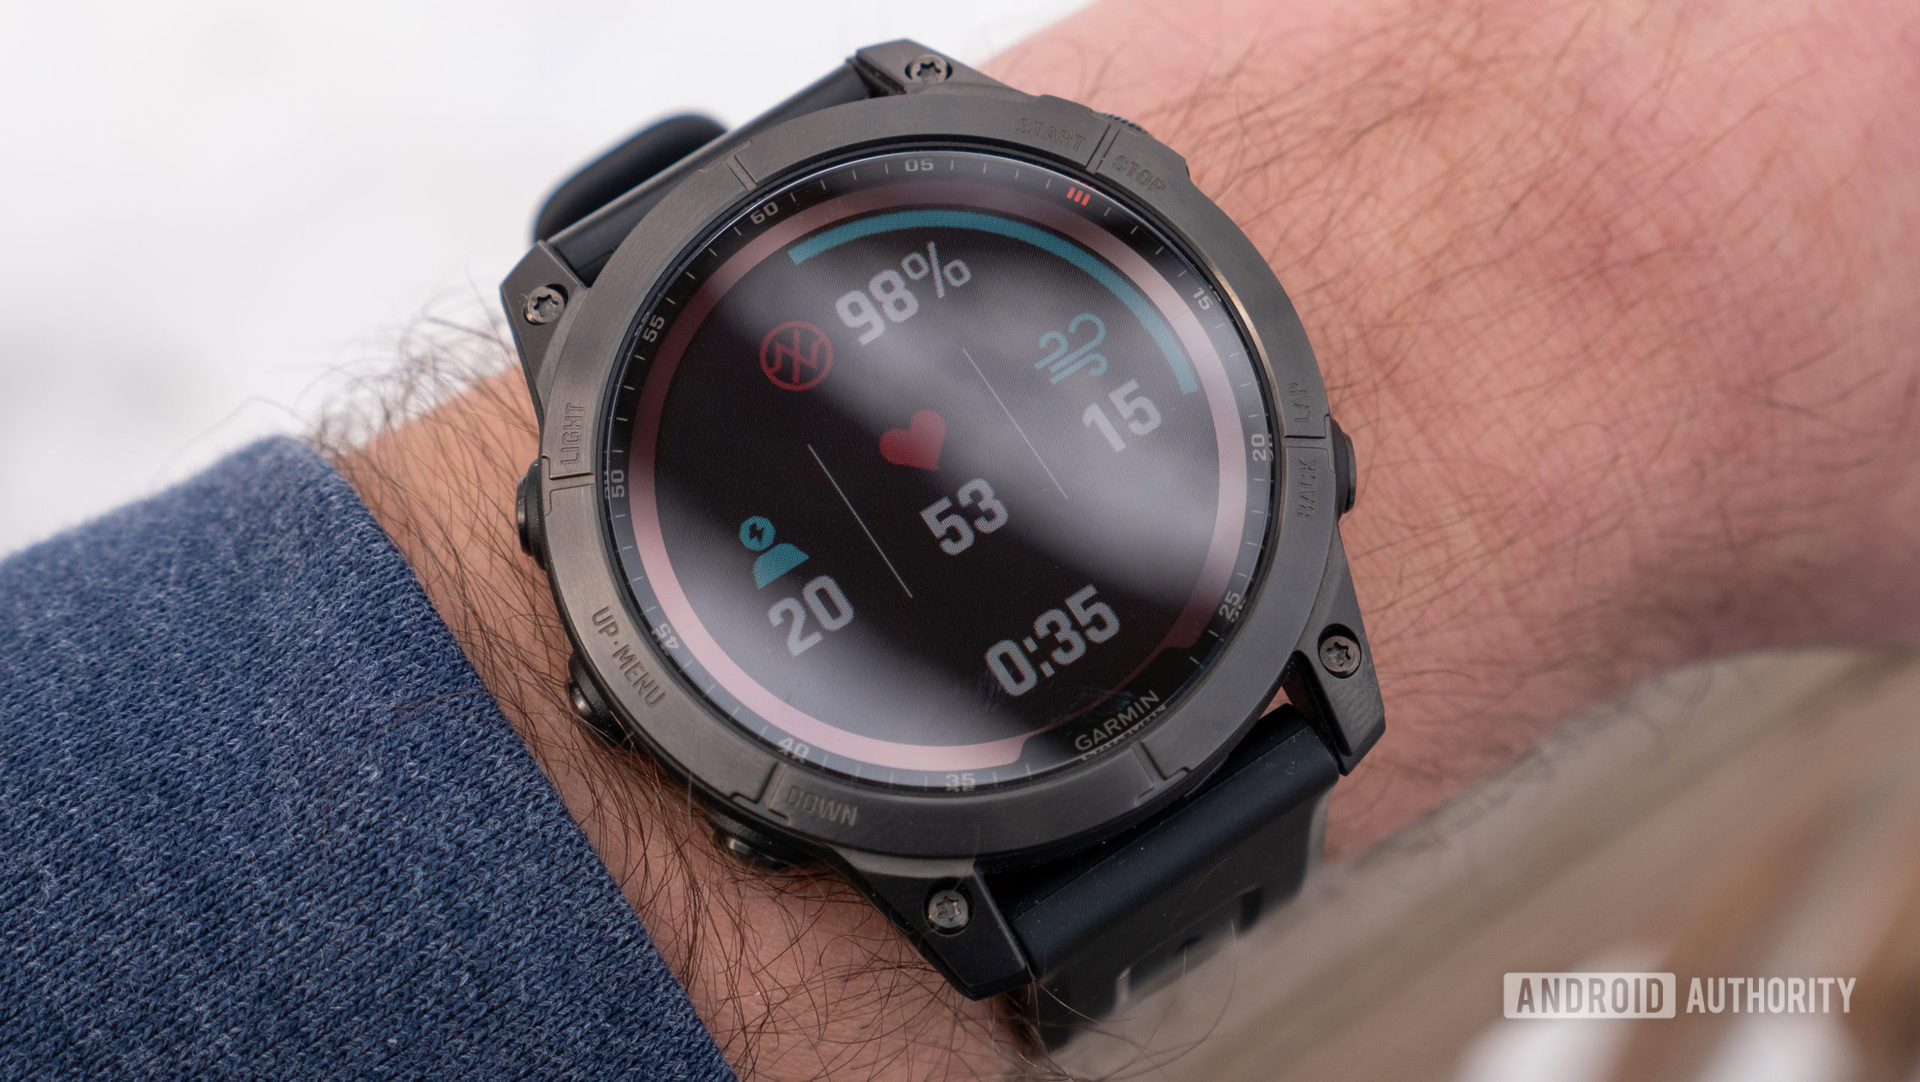 Garmin Fenix 7 Sapphire Solar GPS watch review - MBR